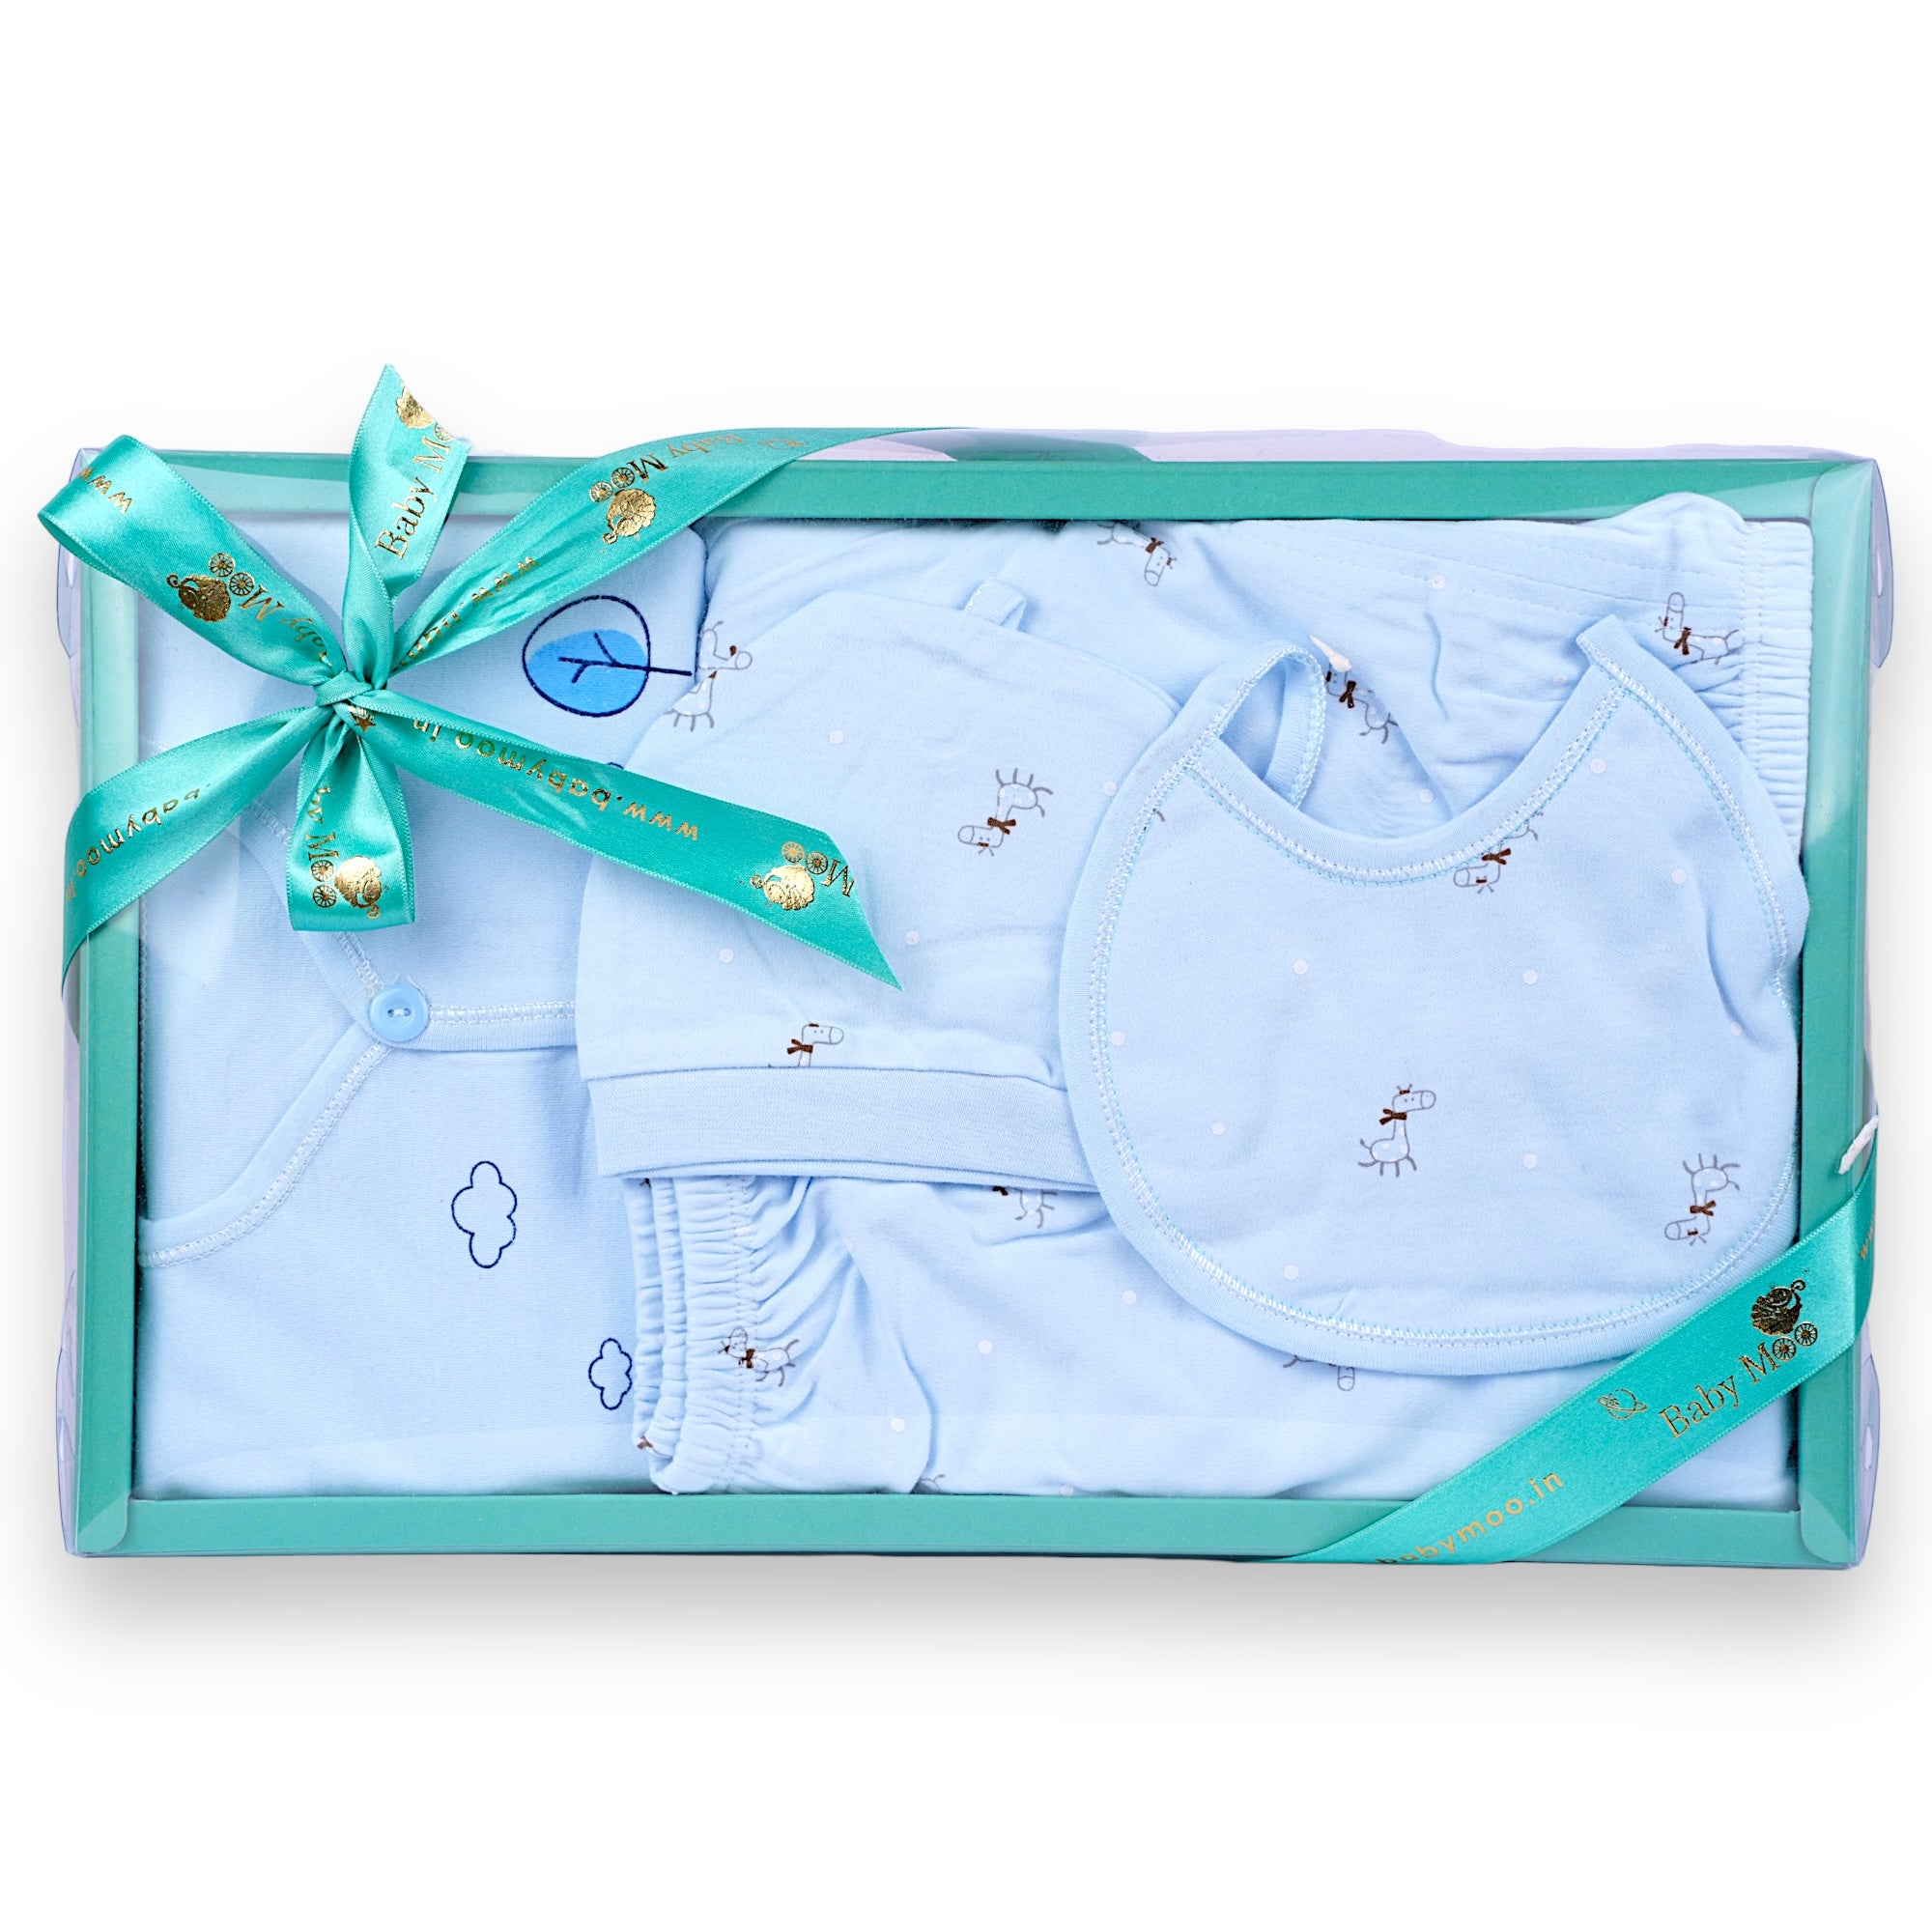 Baby Moo Giraffe Print Cap Bib Pyjamas 5 Pcs Clothing Gift Set - Blue